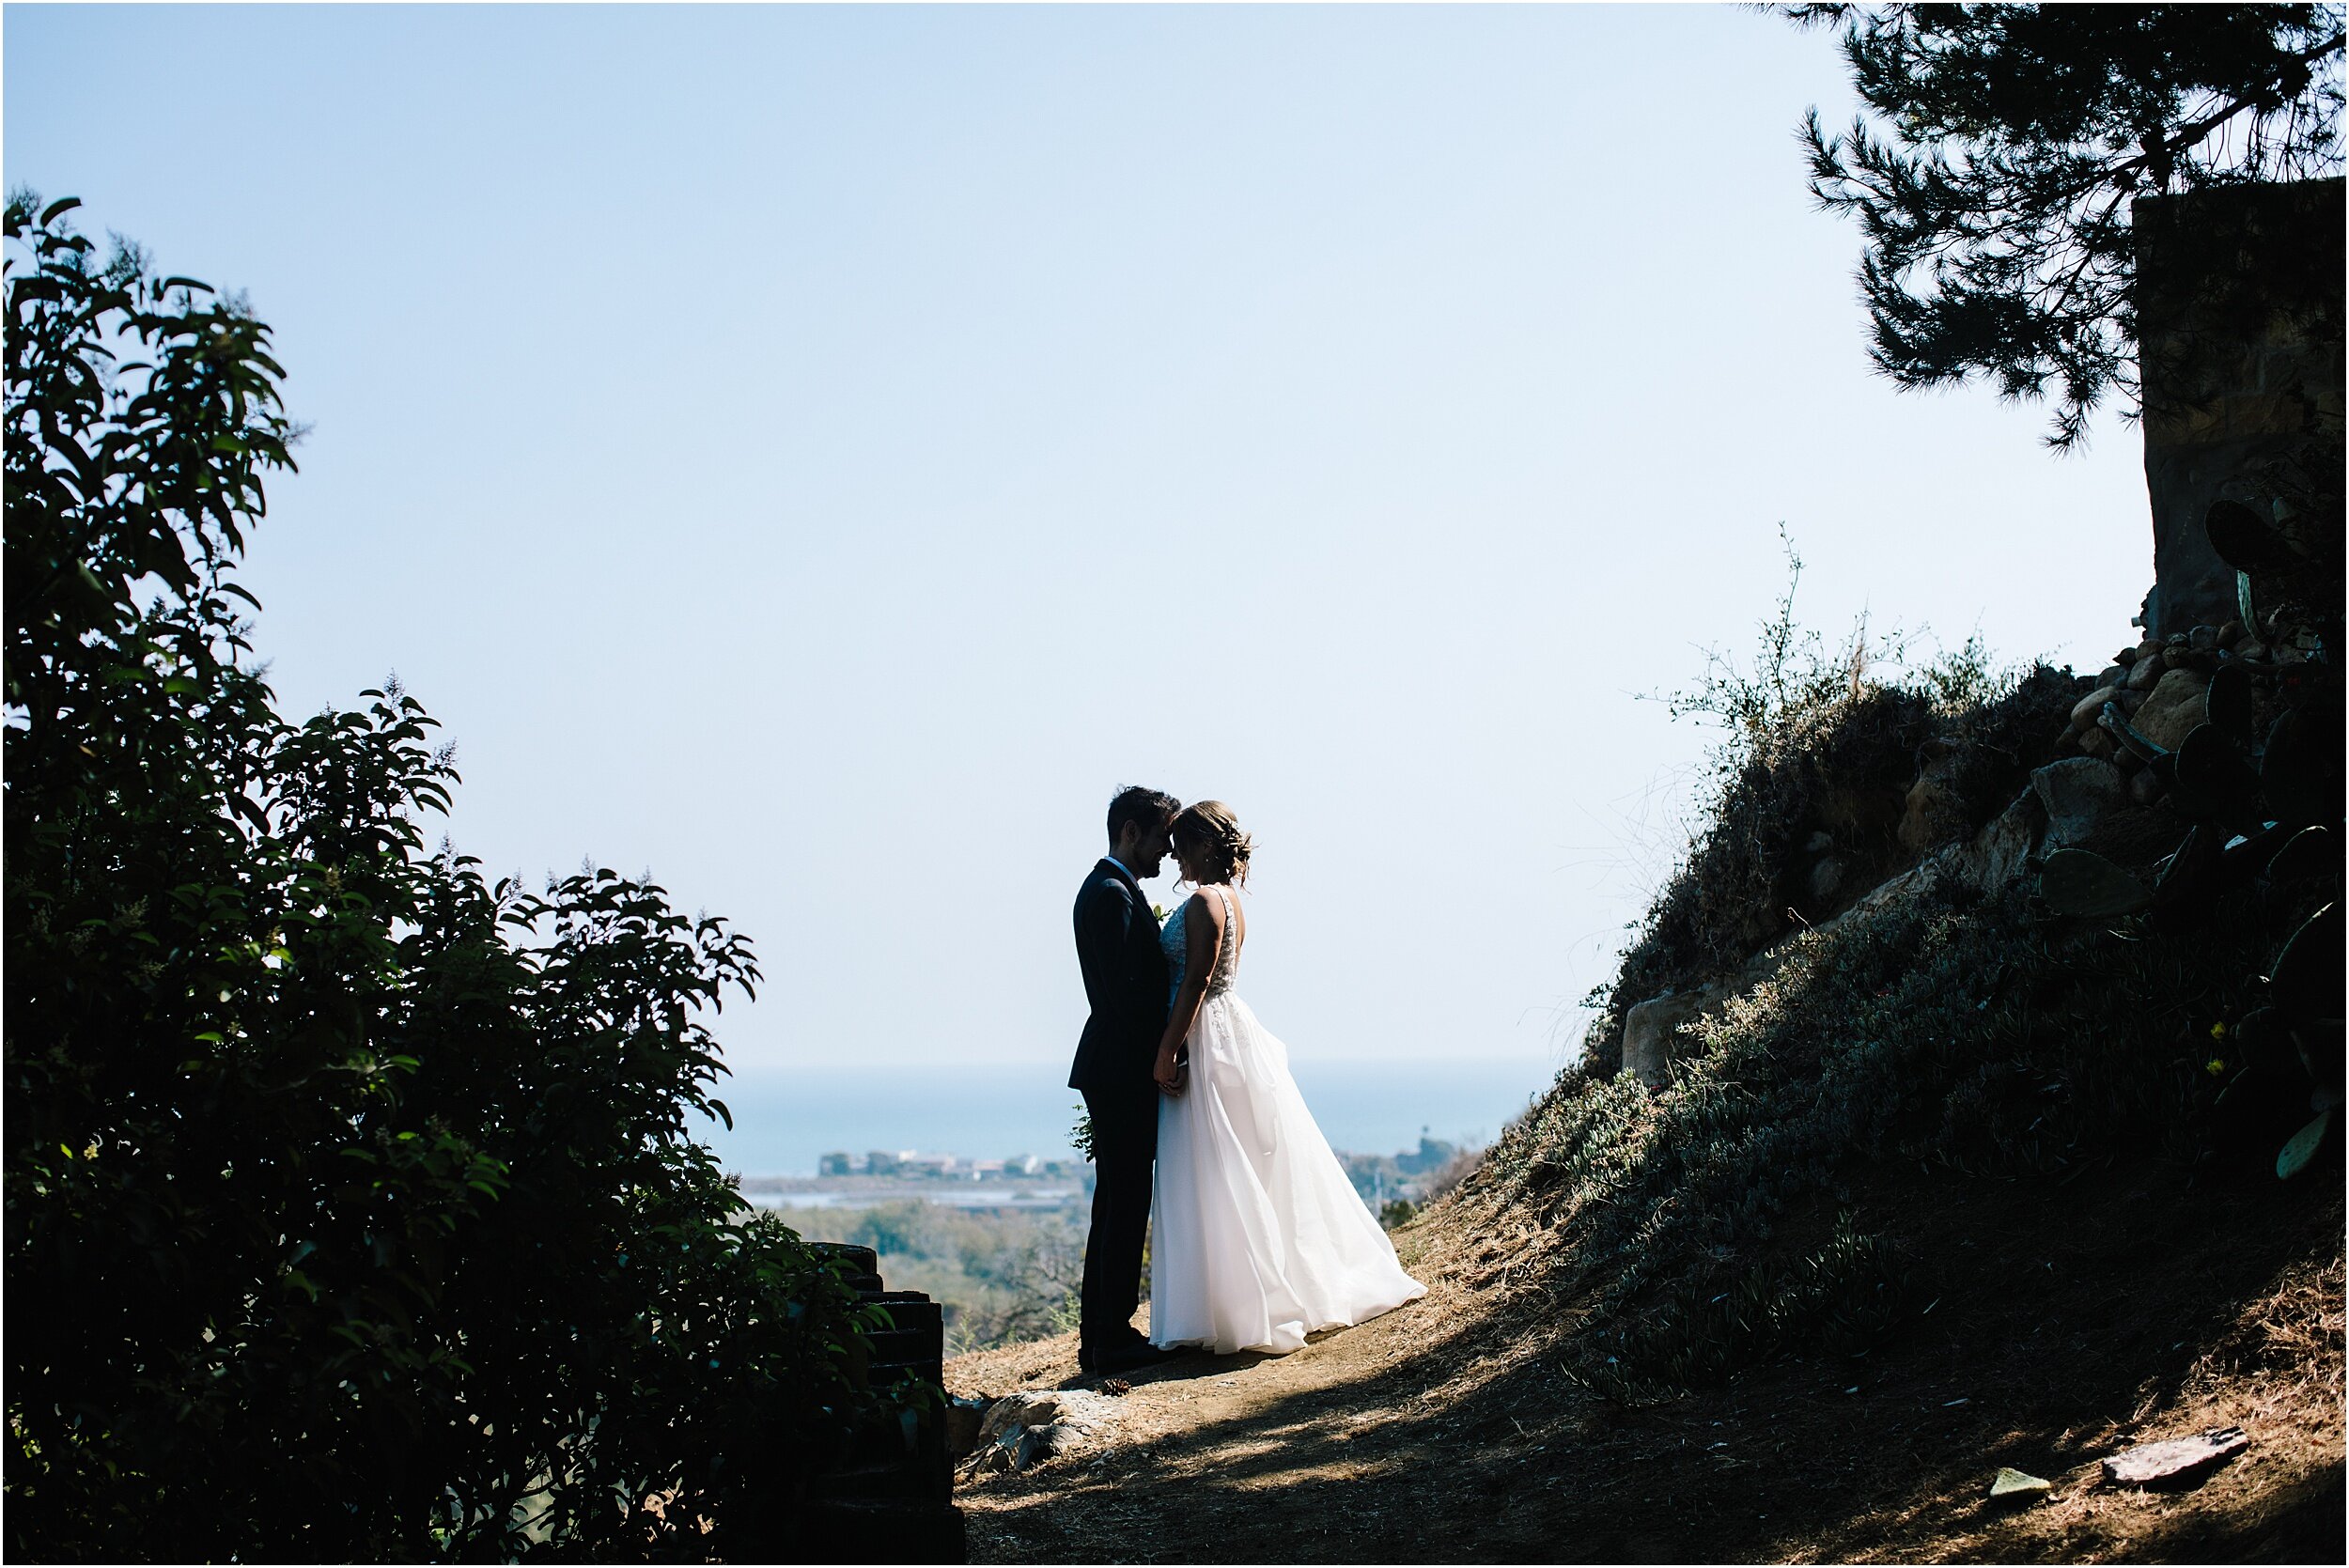 Caitlin and jason | Small Malibu Wedding | Malibu Elopement Photographer_0011.jpg